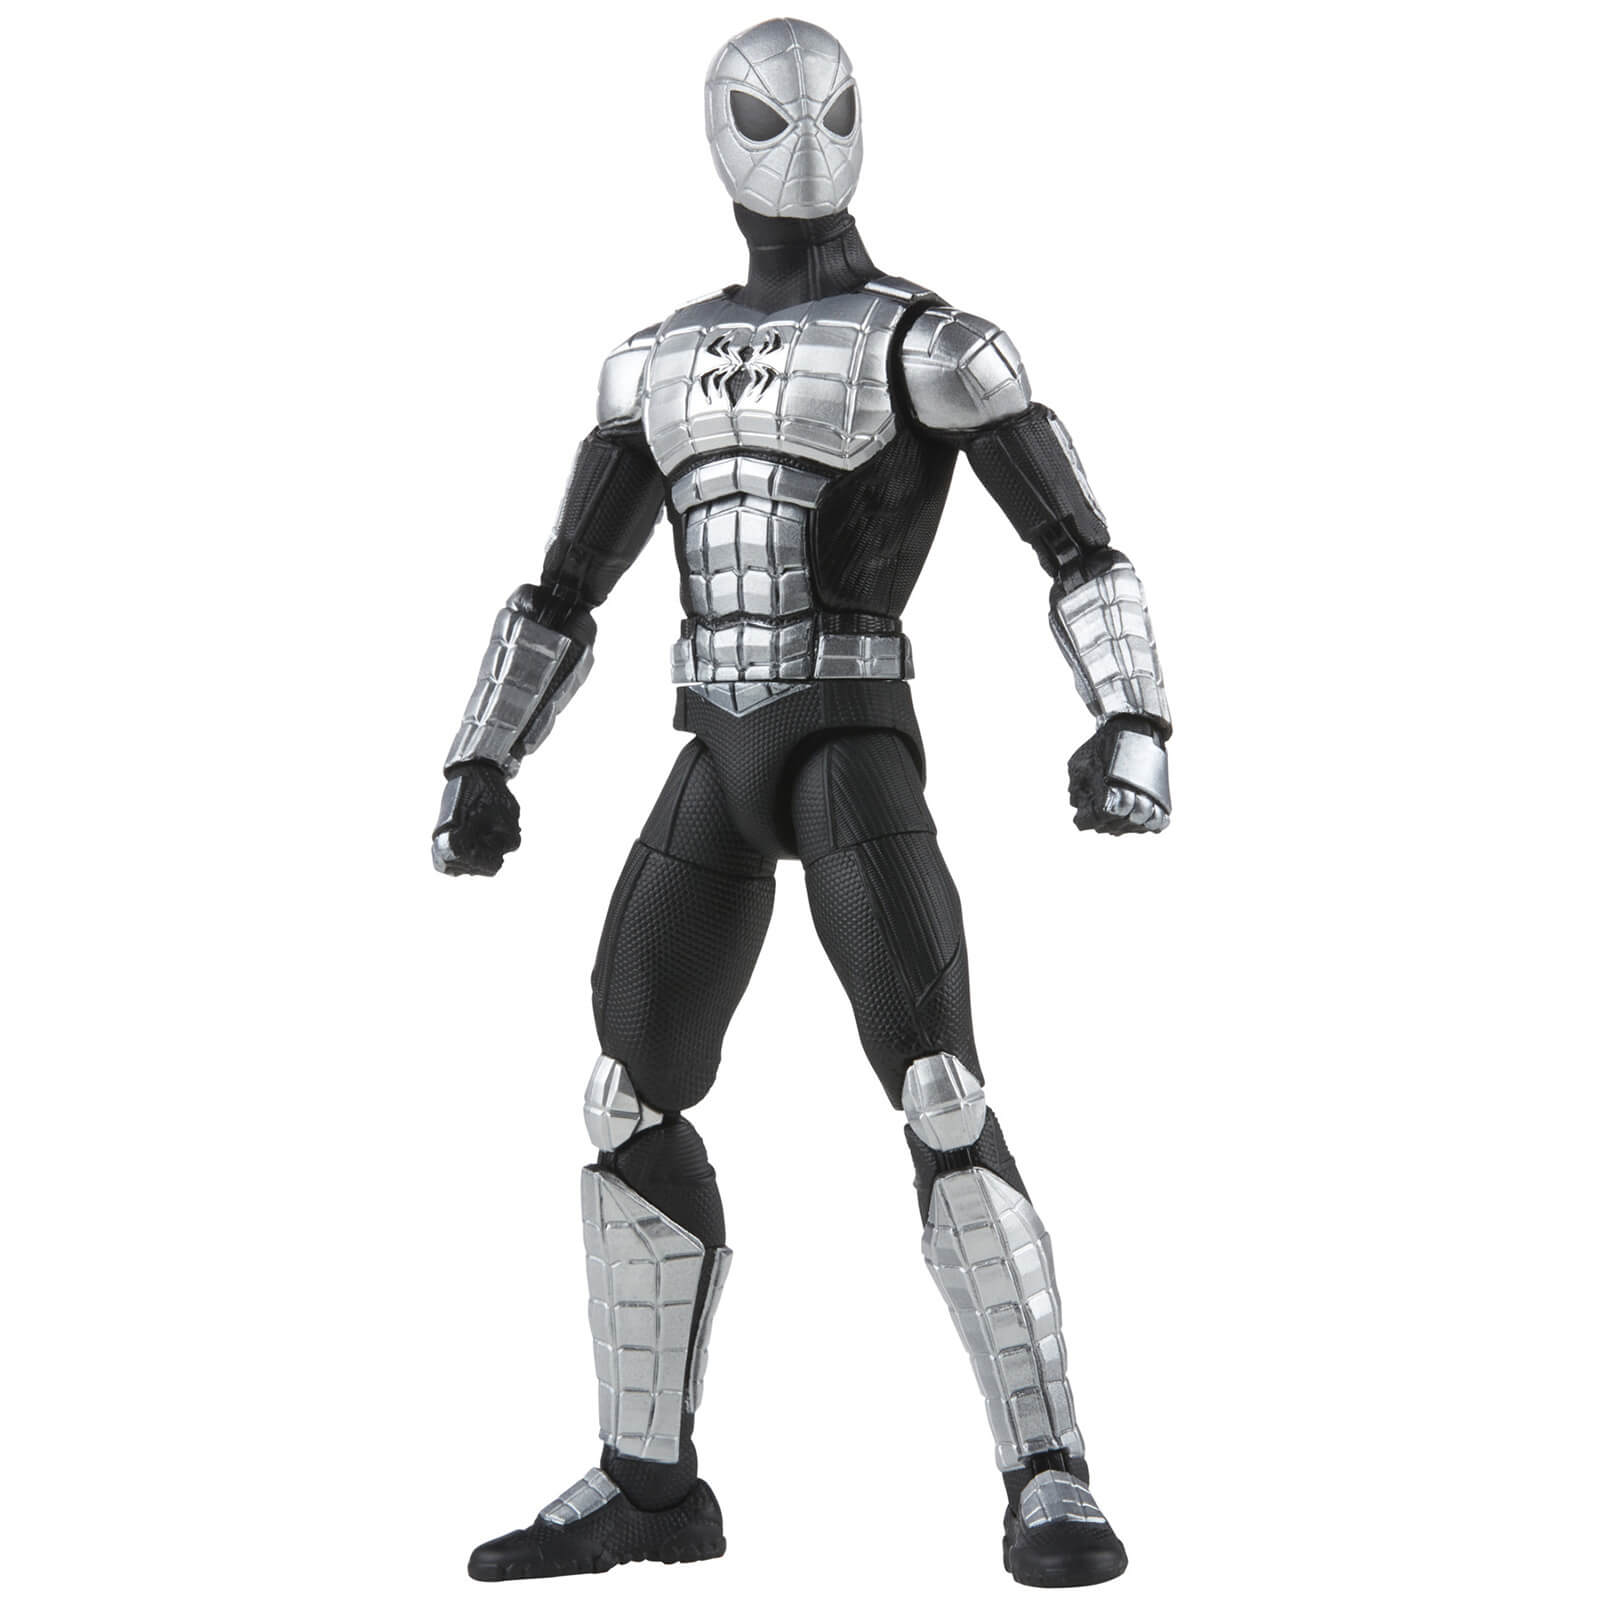 Hasbro Marvel Legends Spider-Man Series Spider-Armor Mk I 6 Inch Action Figure